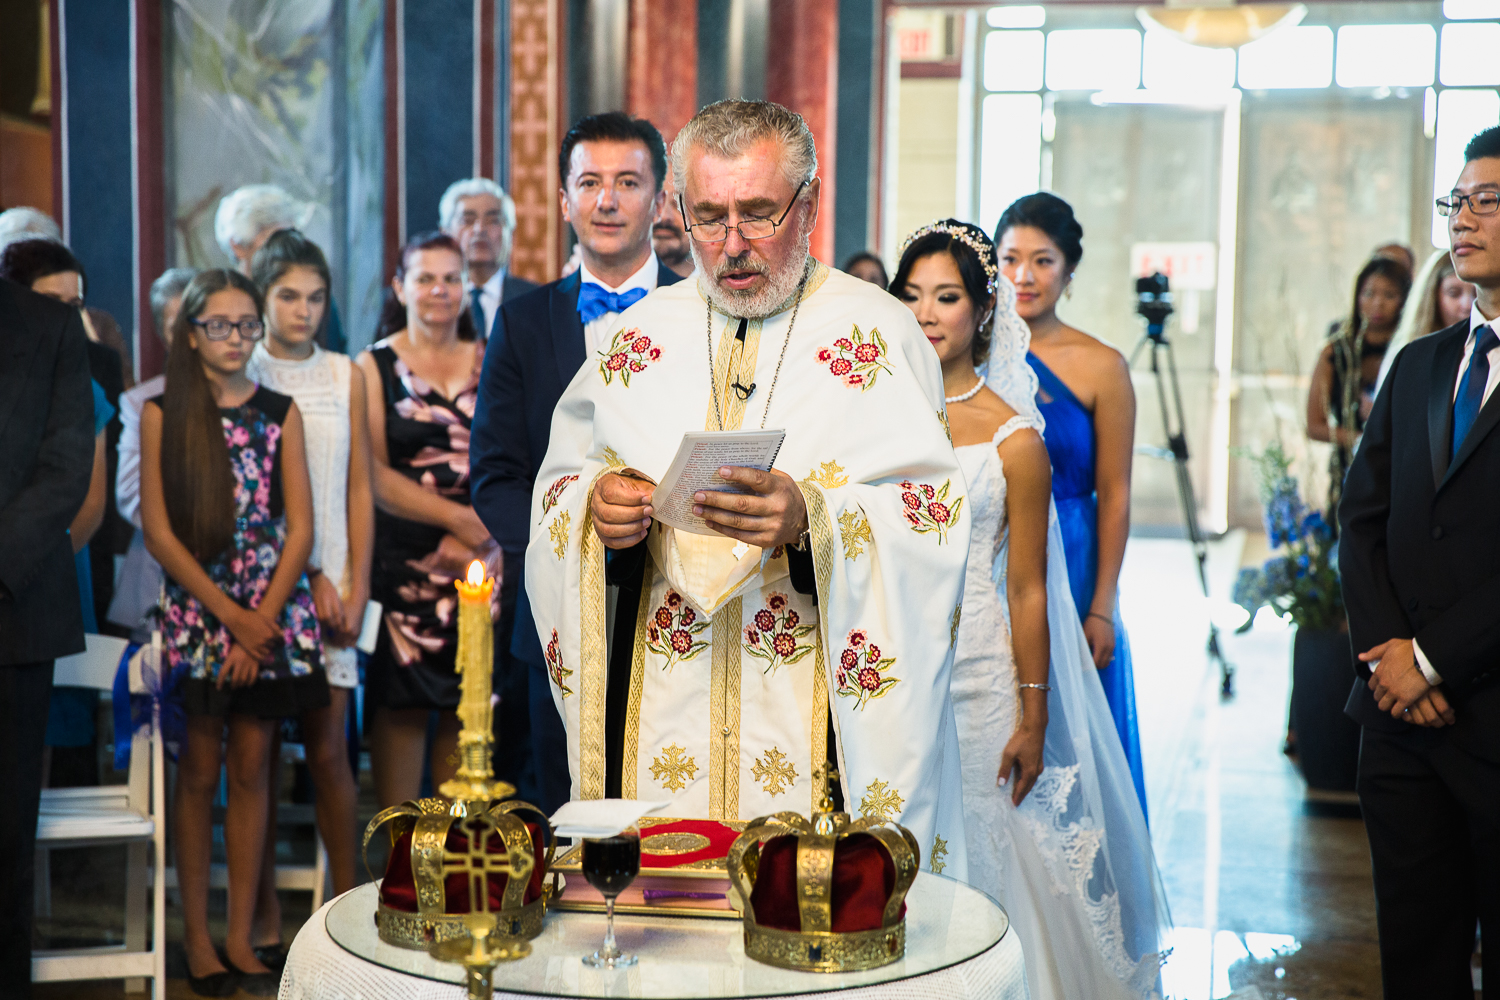 St-Sava-Serbian-Orthodox-Church-Wedding-Mississauga-Ontario-Derrel-Ho-Shing-Photography-0011.jpg